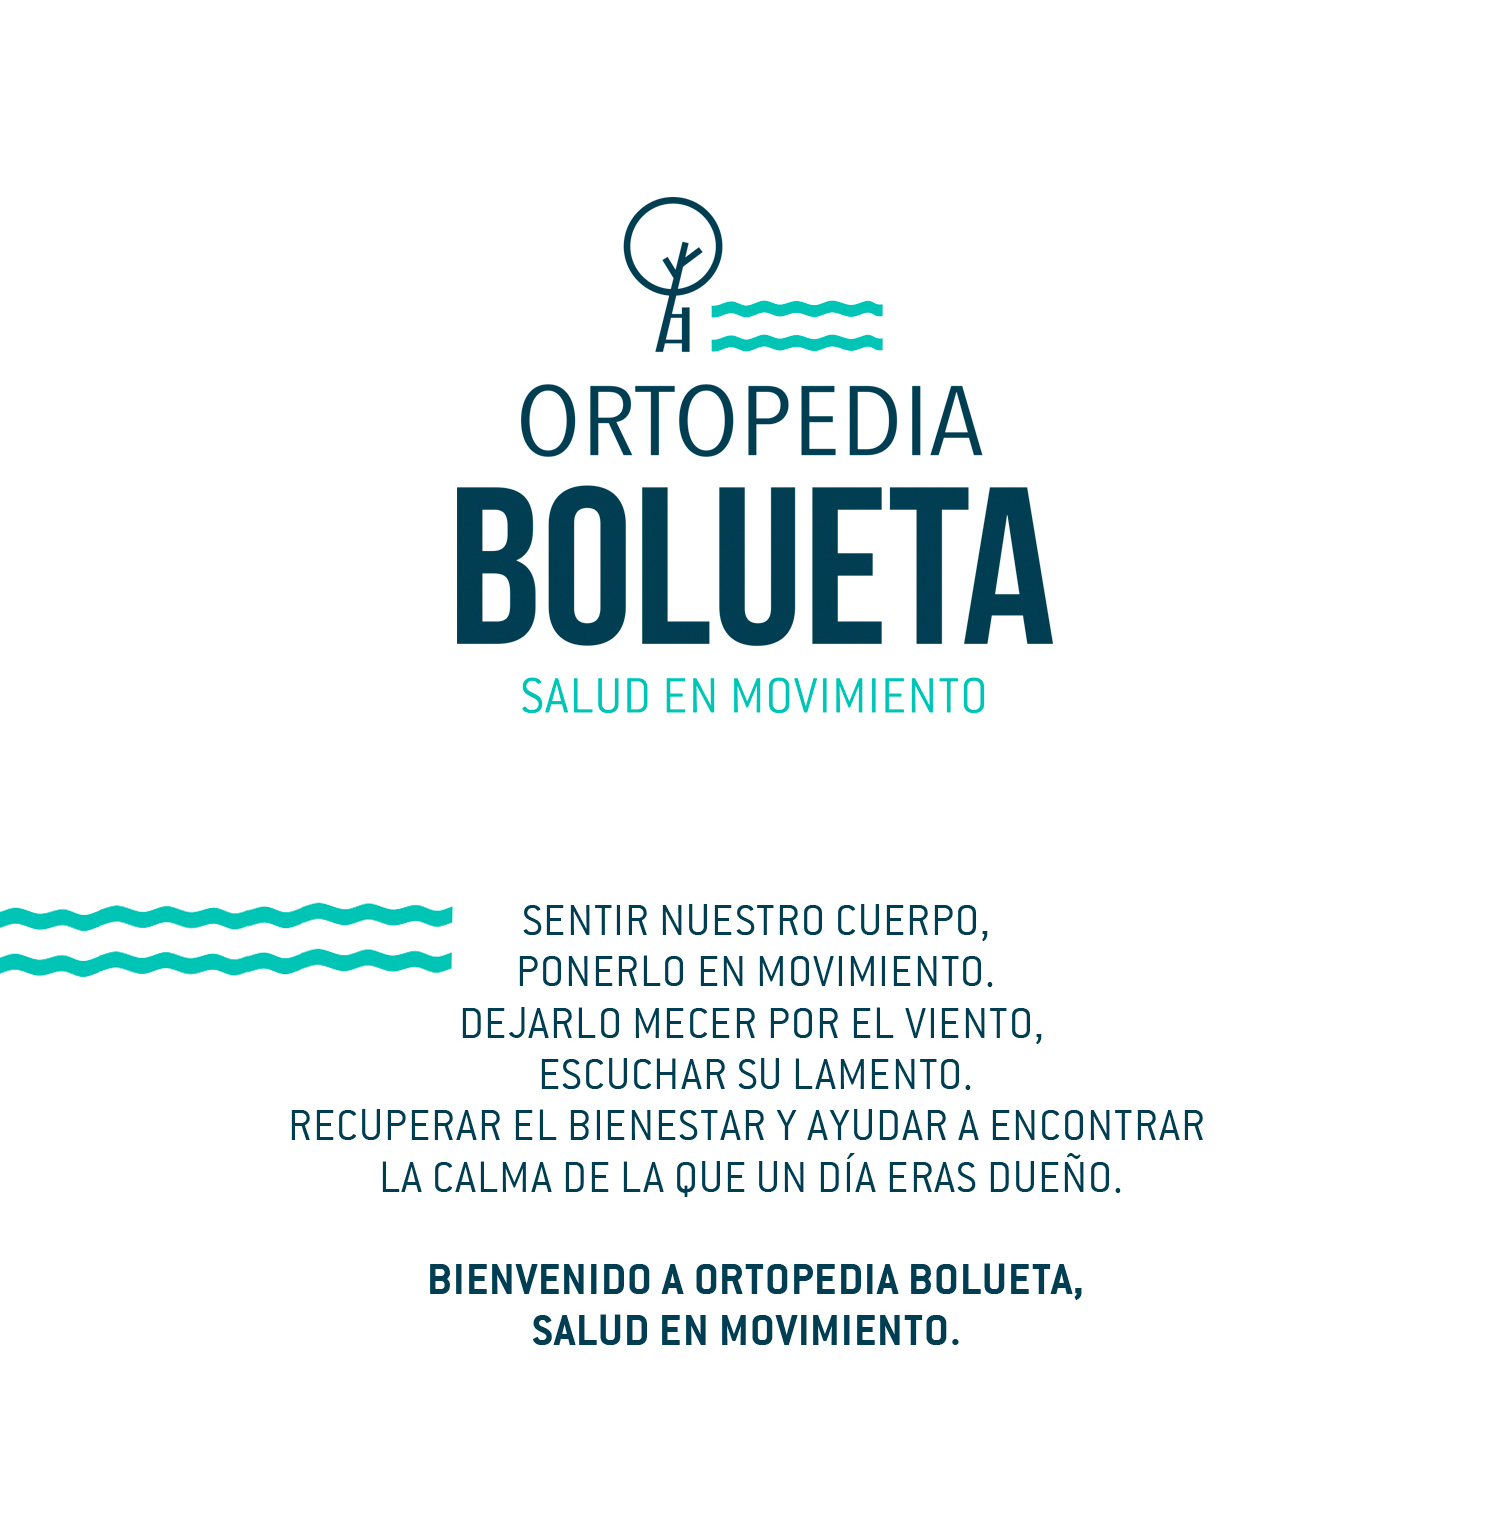 Ortopedia Bouleta by Inés Elío Lamarca - Creative Work